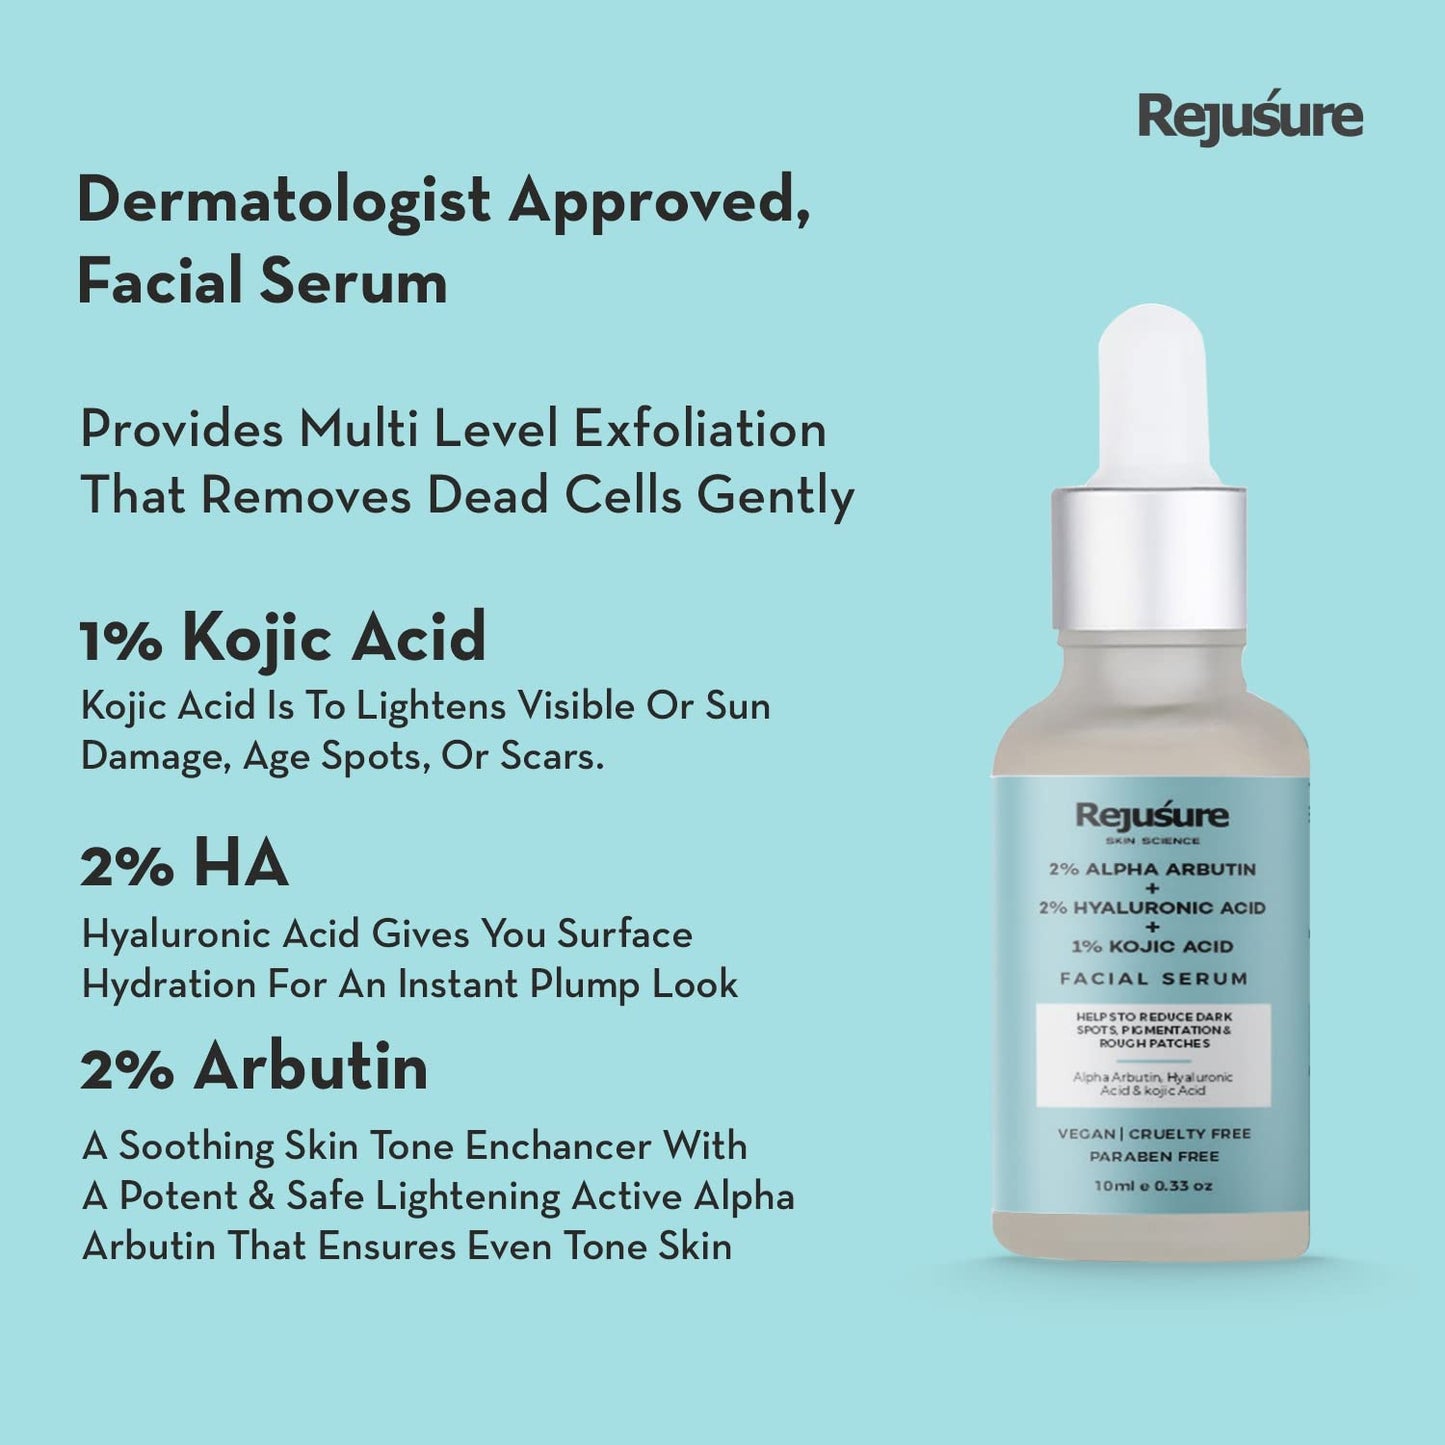 Rejusure 2 Alpha Arbutin  2 Hyaluronic Acid  1 Kojic Acid Face Serum for Dark Spot Pigmentation Sun Tanning Treats Blemishes Uneven Skin Tone  Acne Marks For Men  Women  10ml